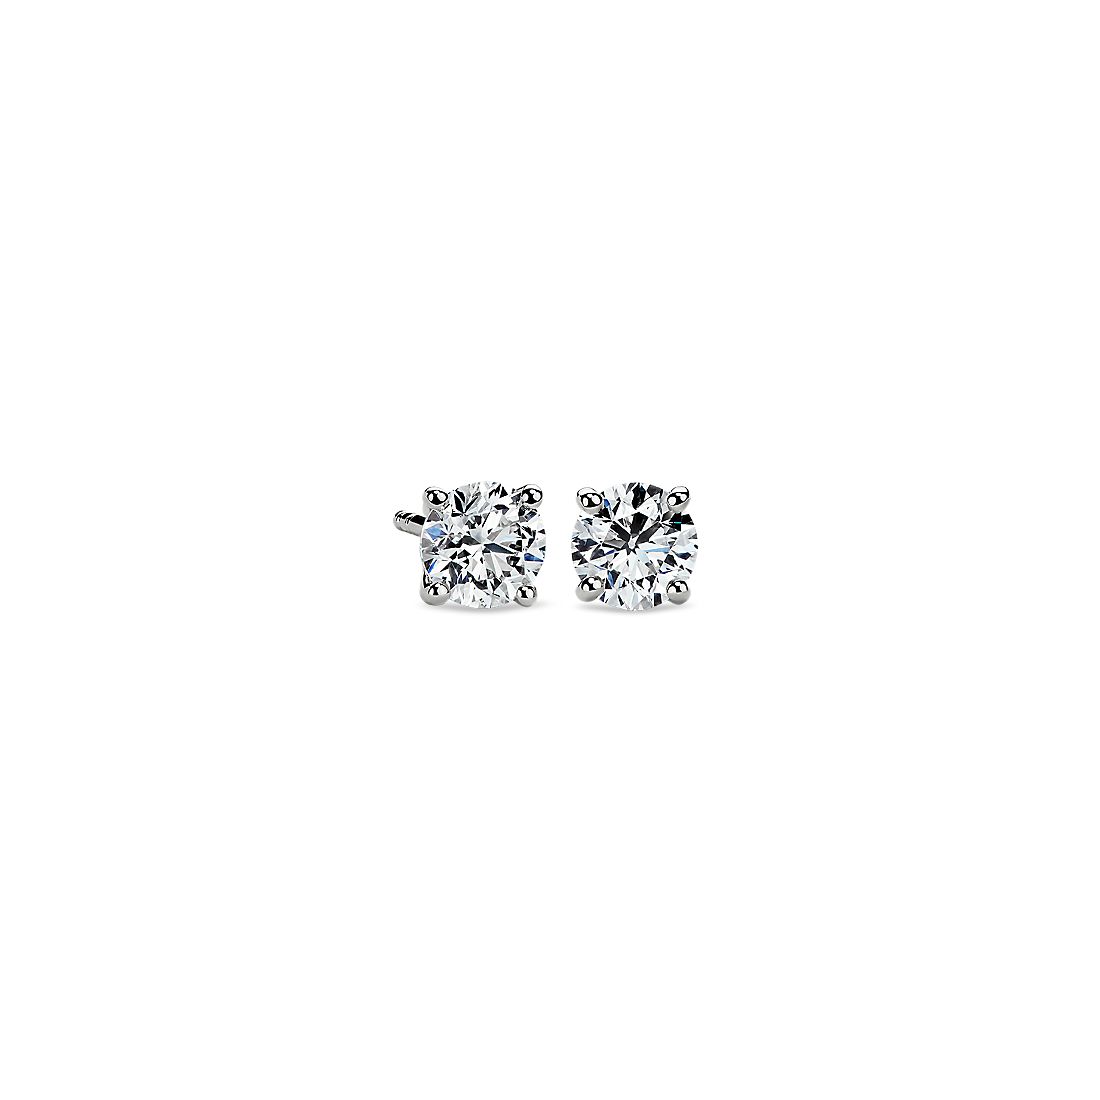 Canadian Diamond Stud Earrings in 18k White Gold (0.96 ct. tw.)